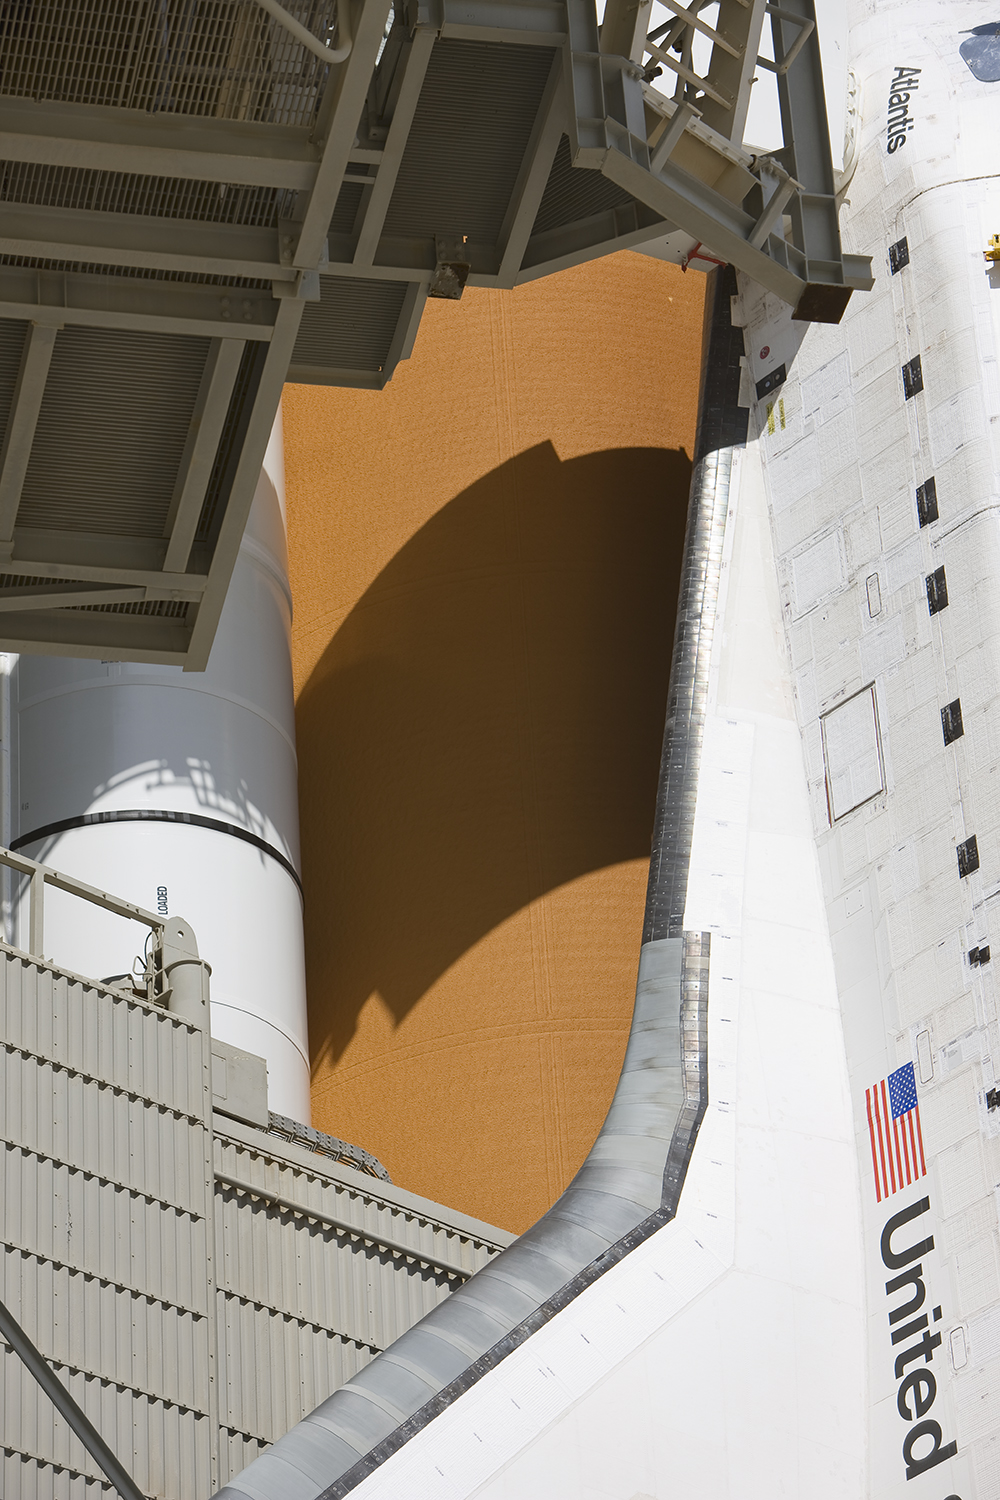 Detail, Space Shuttle Atlantis, Pad 39A, STS-125